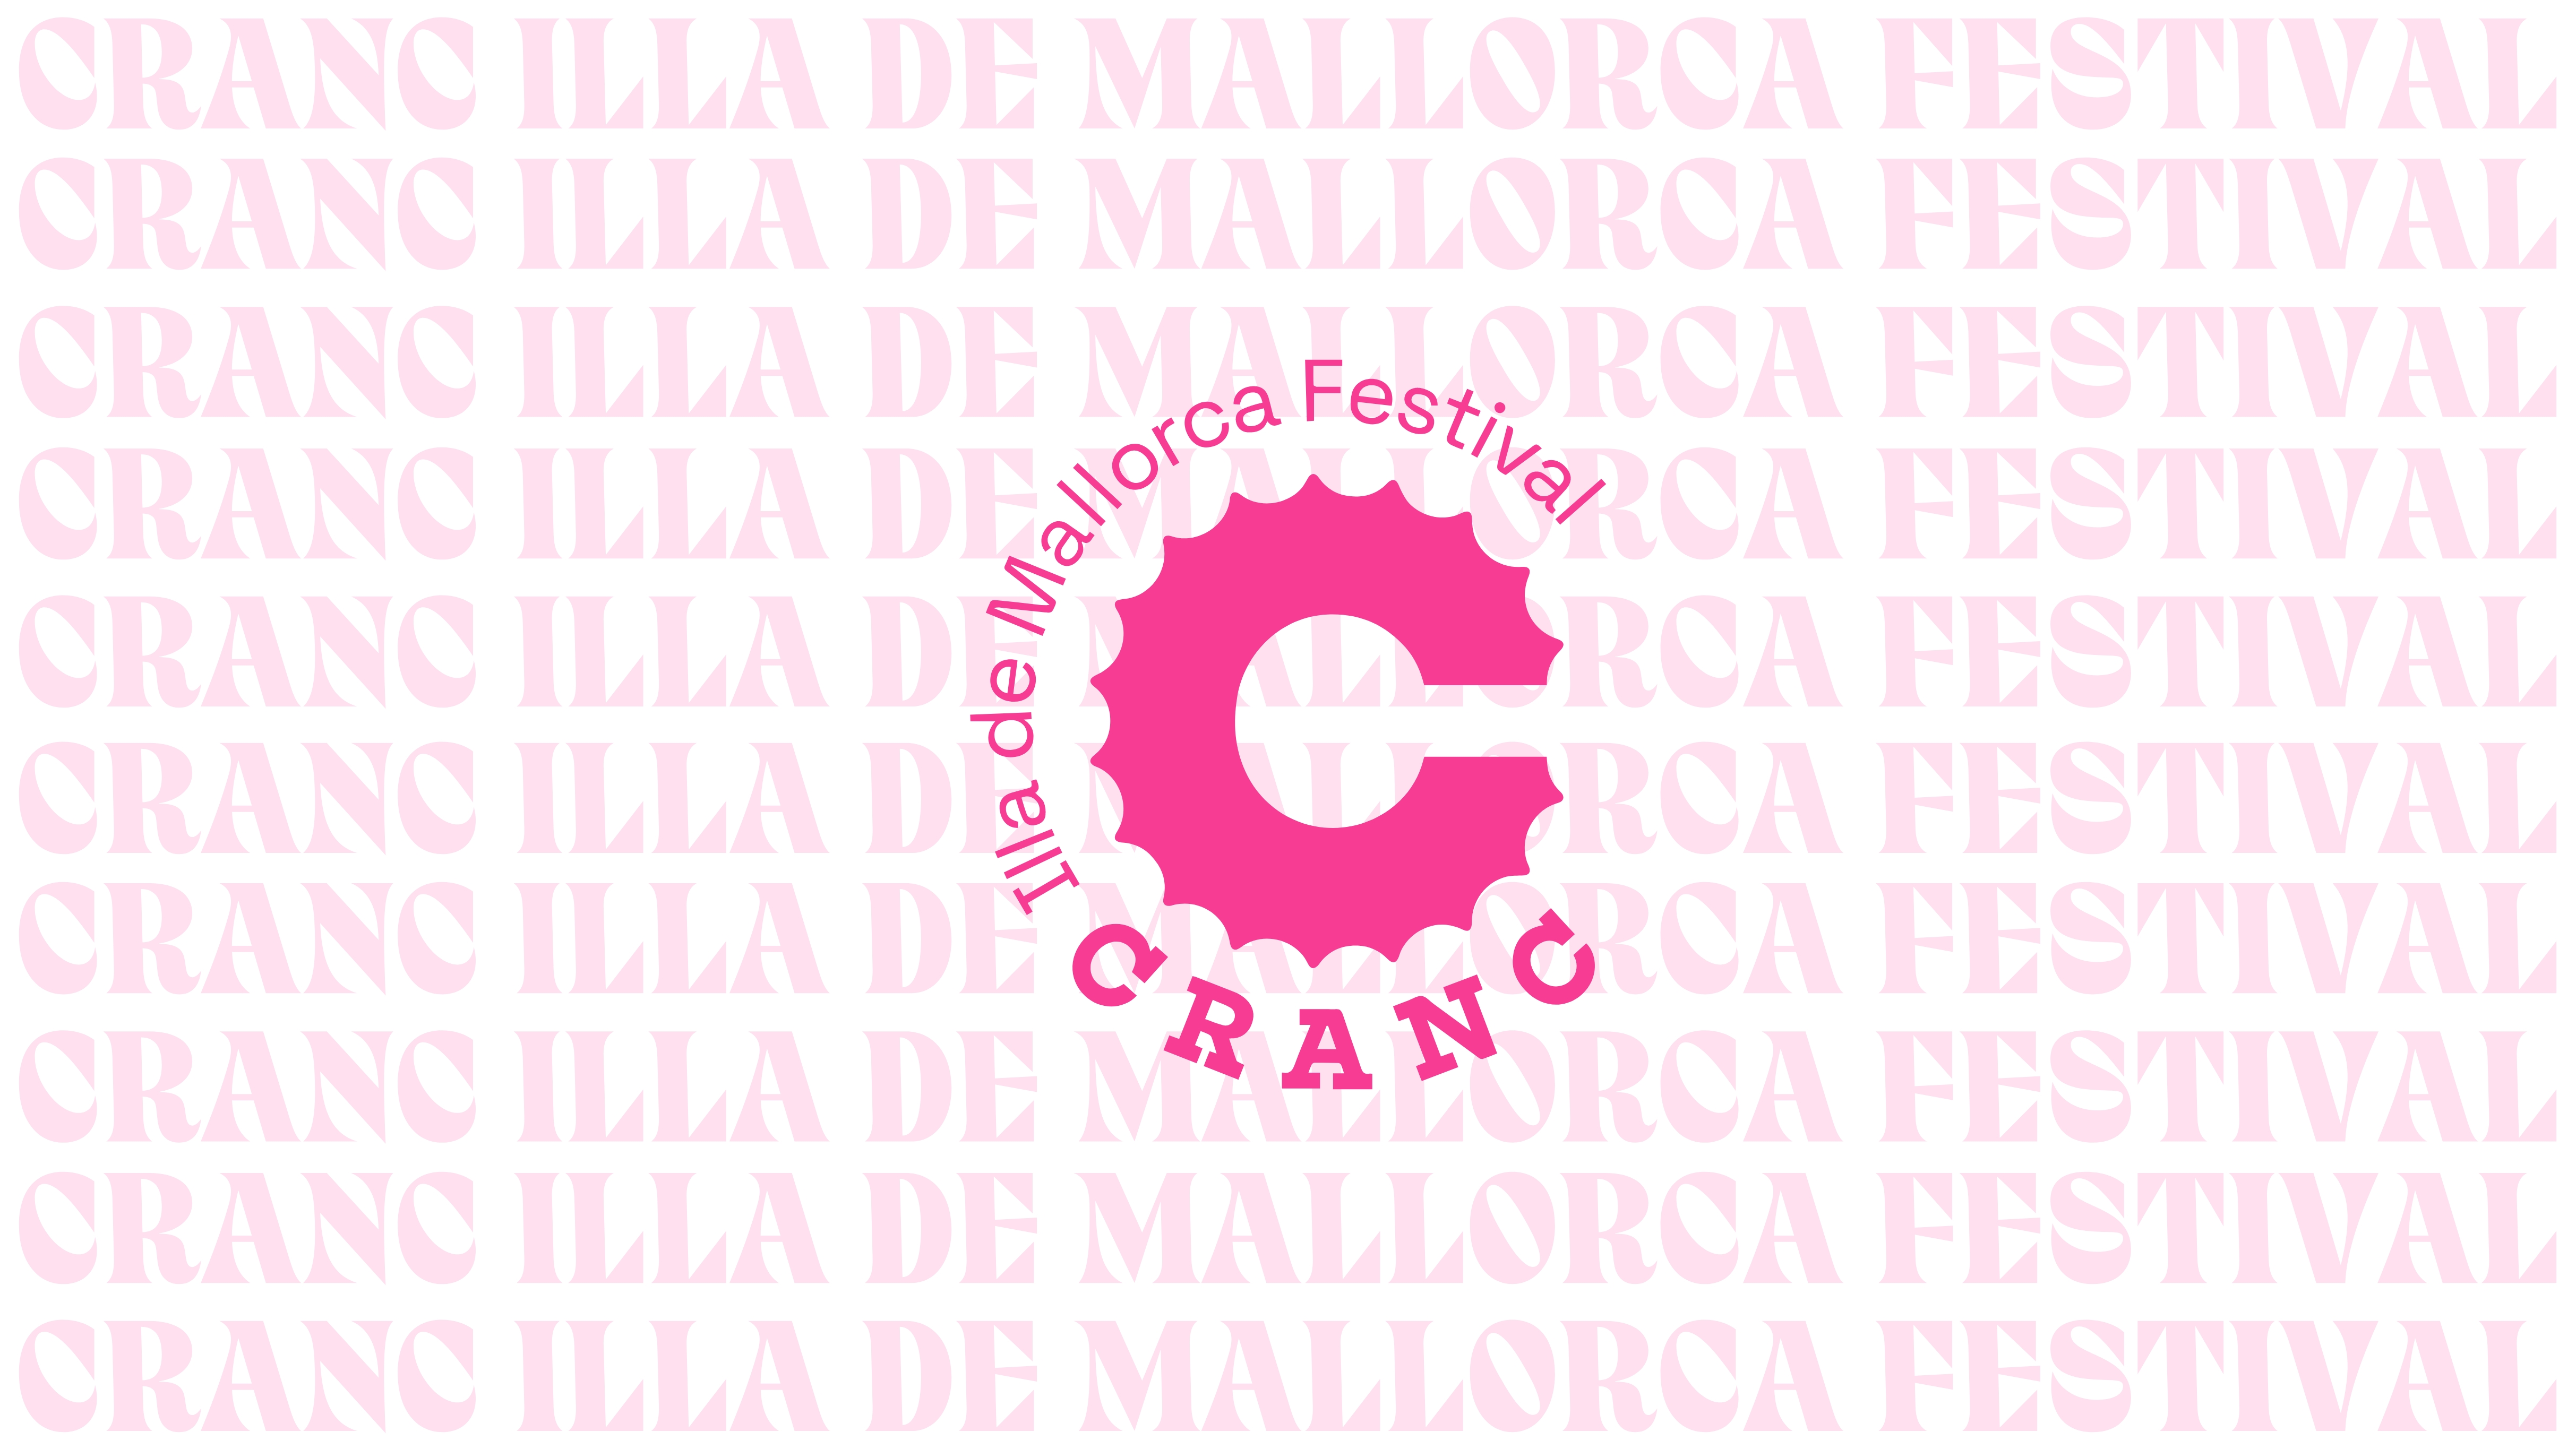 Cranc Mallorca Festival ya está aquí